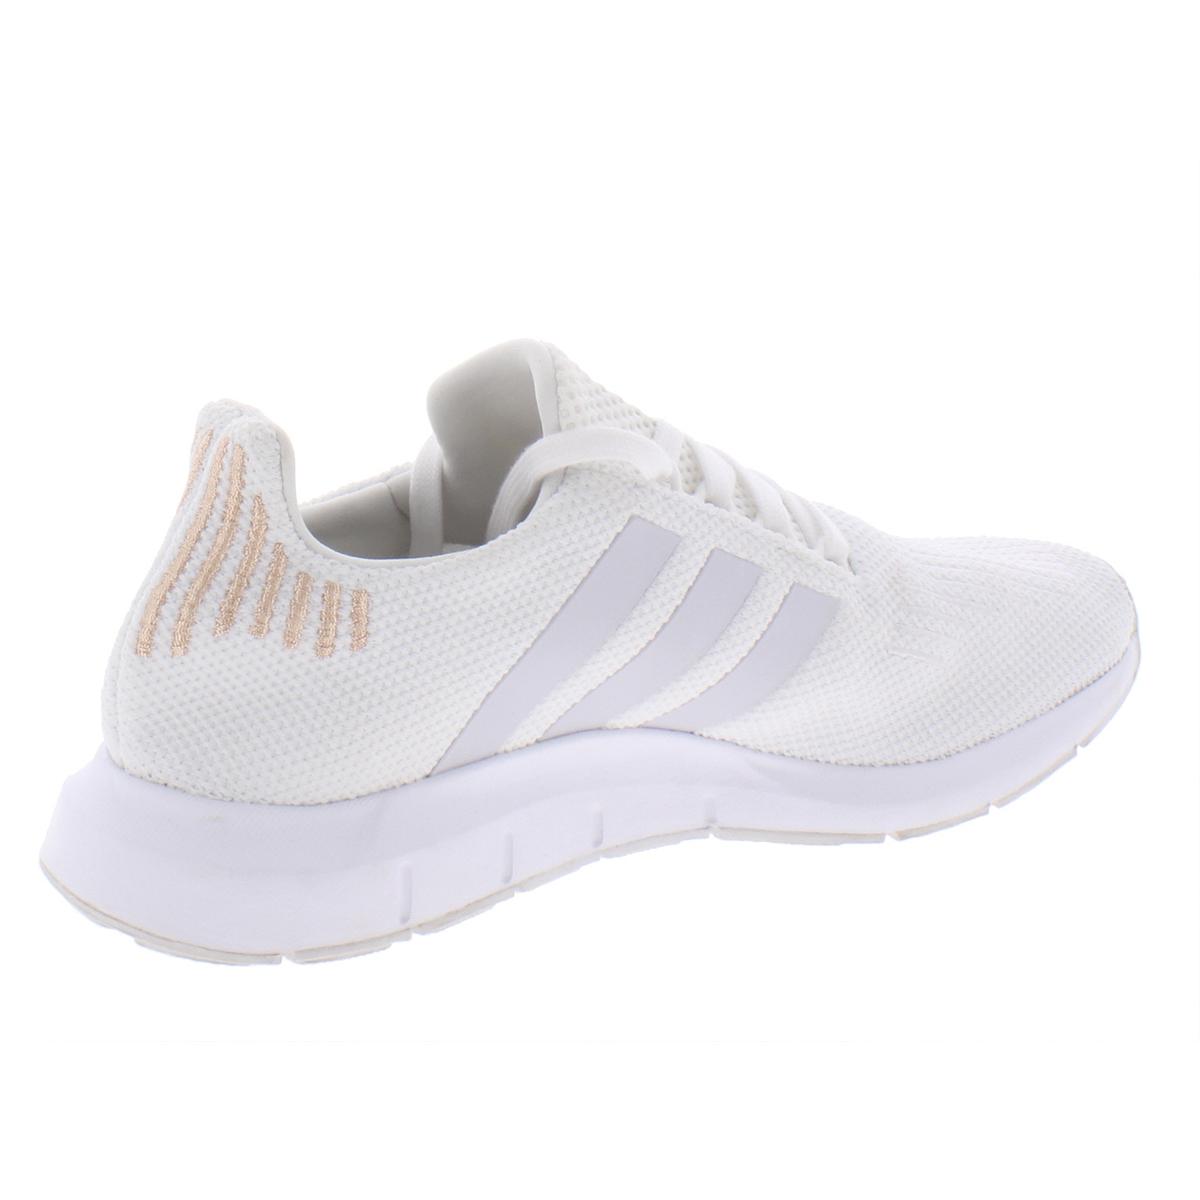 Adidas Womens White Workout Running Shoes Sneakers 8.5 Medium (B,M) BHFO 2738 | eBay